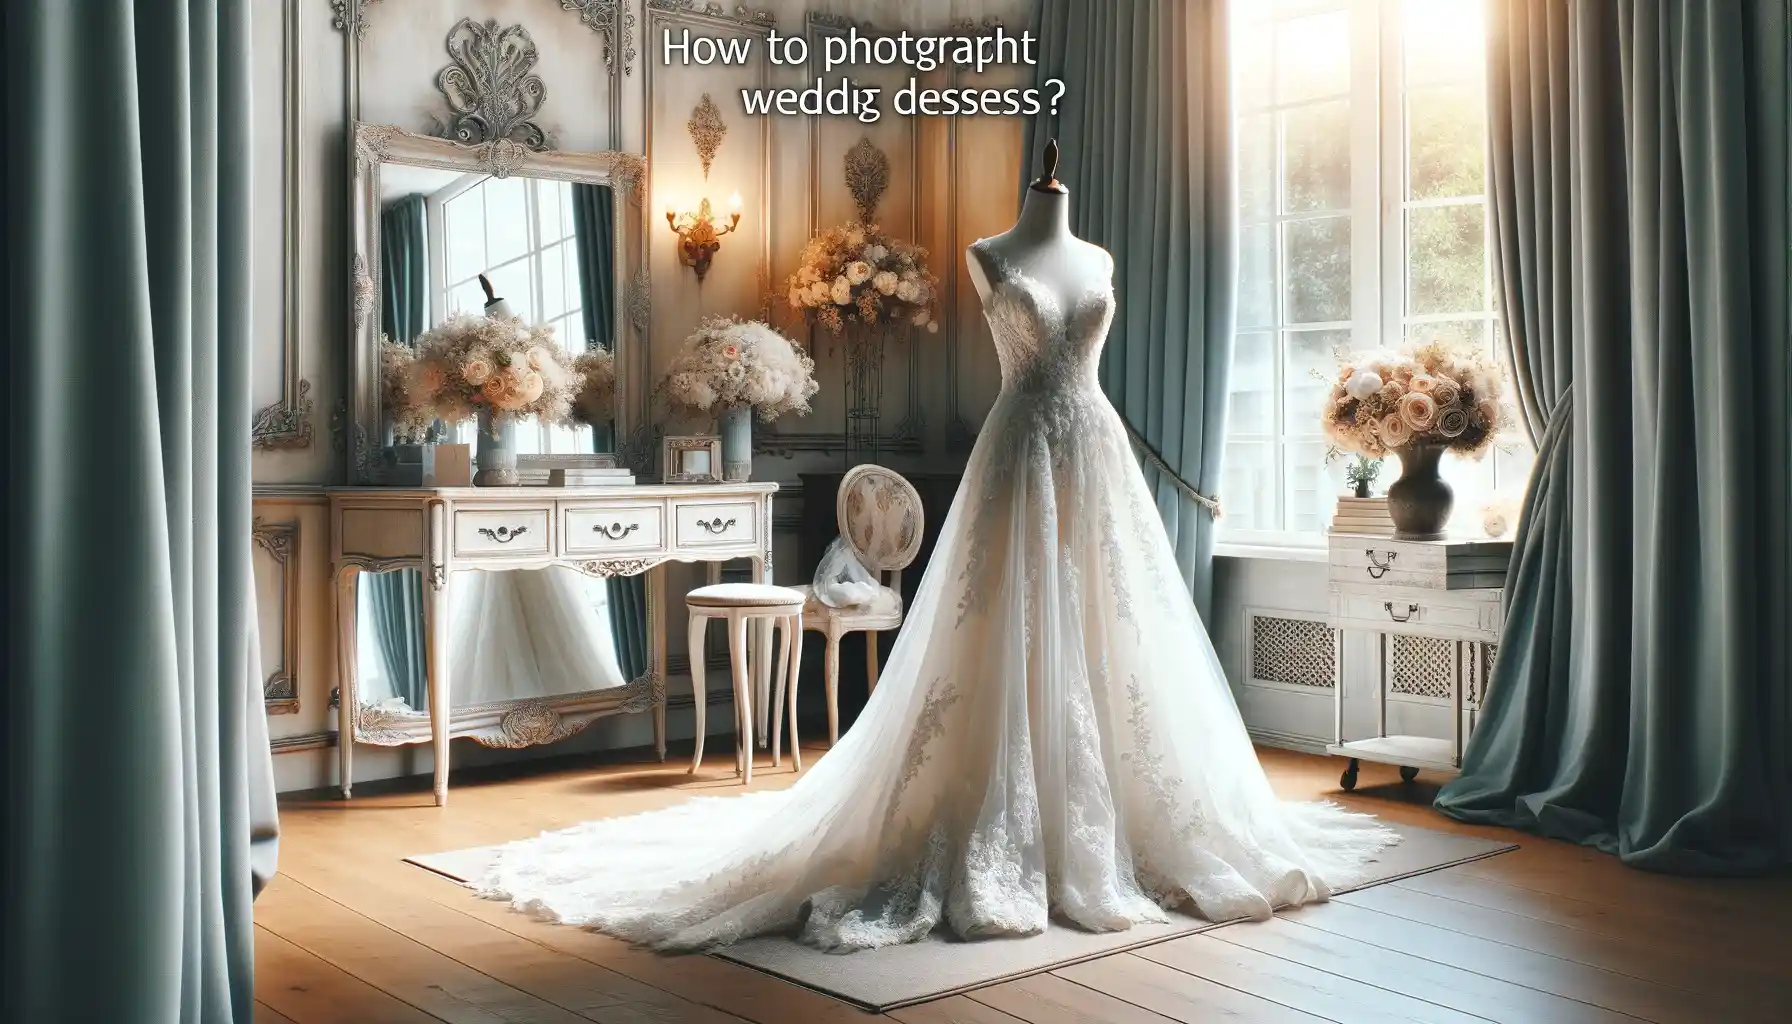 Photograph Wedding Dresses A Comprehensive Guide